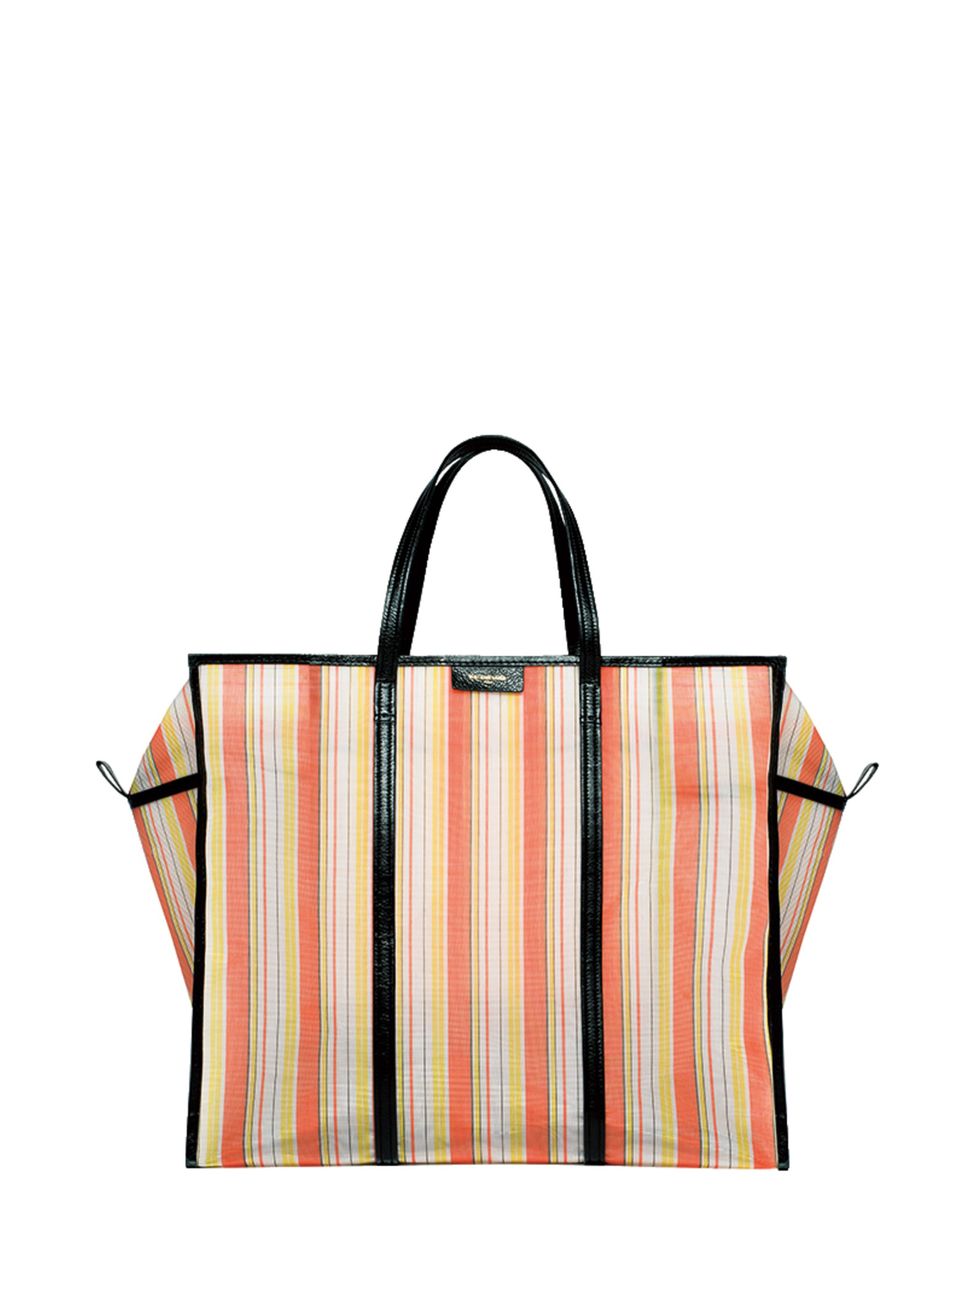 Bag, Luggage and bags, Shoulder bag, Home accessories, Tote bag, Shopping bag, Handbag, Pattern, 